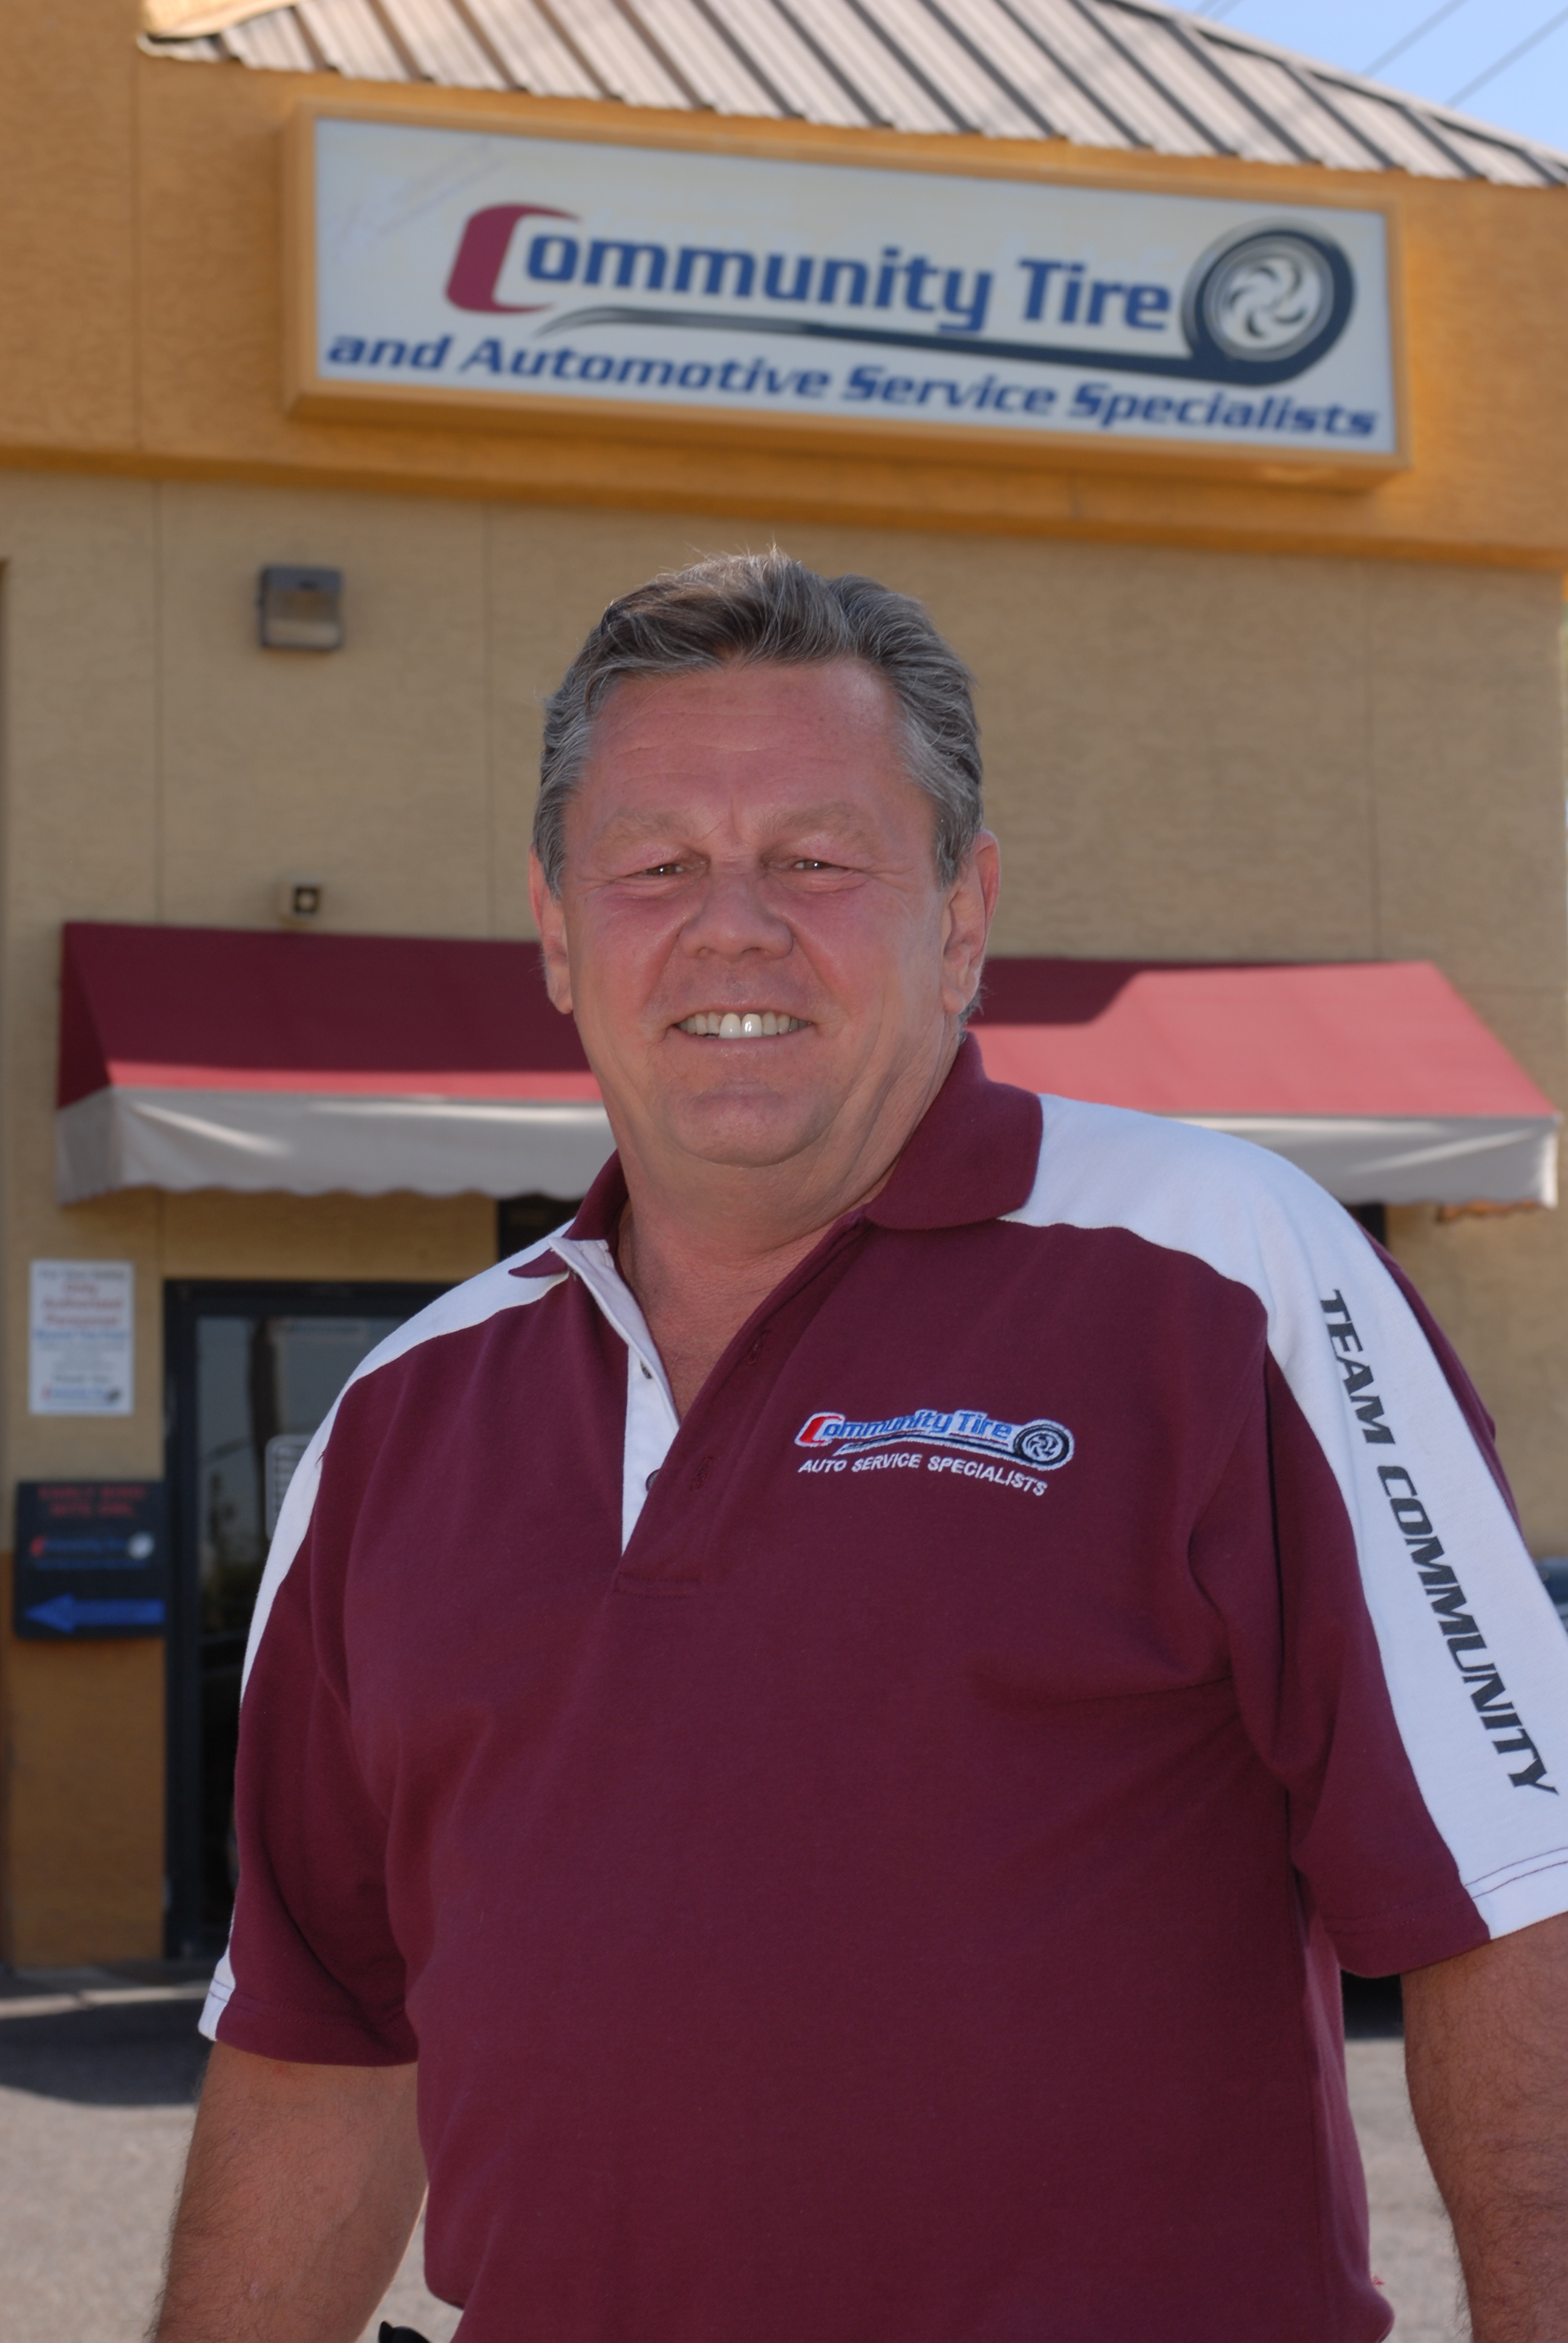 Howard Fleischmann, Owner of Community Tire